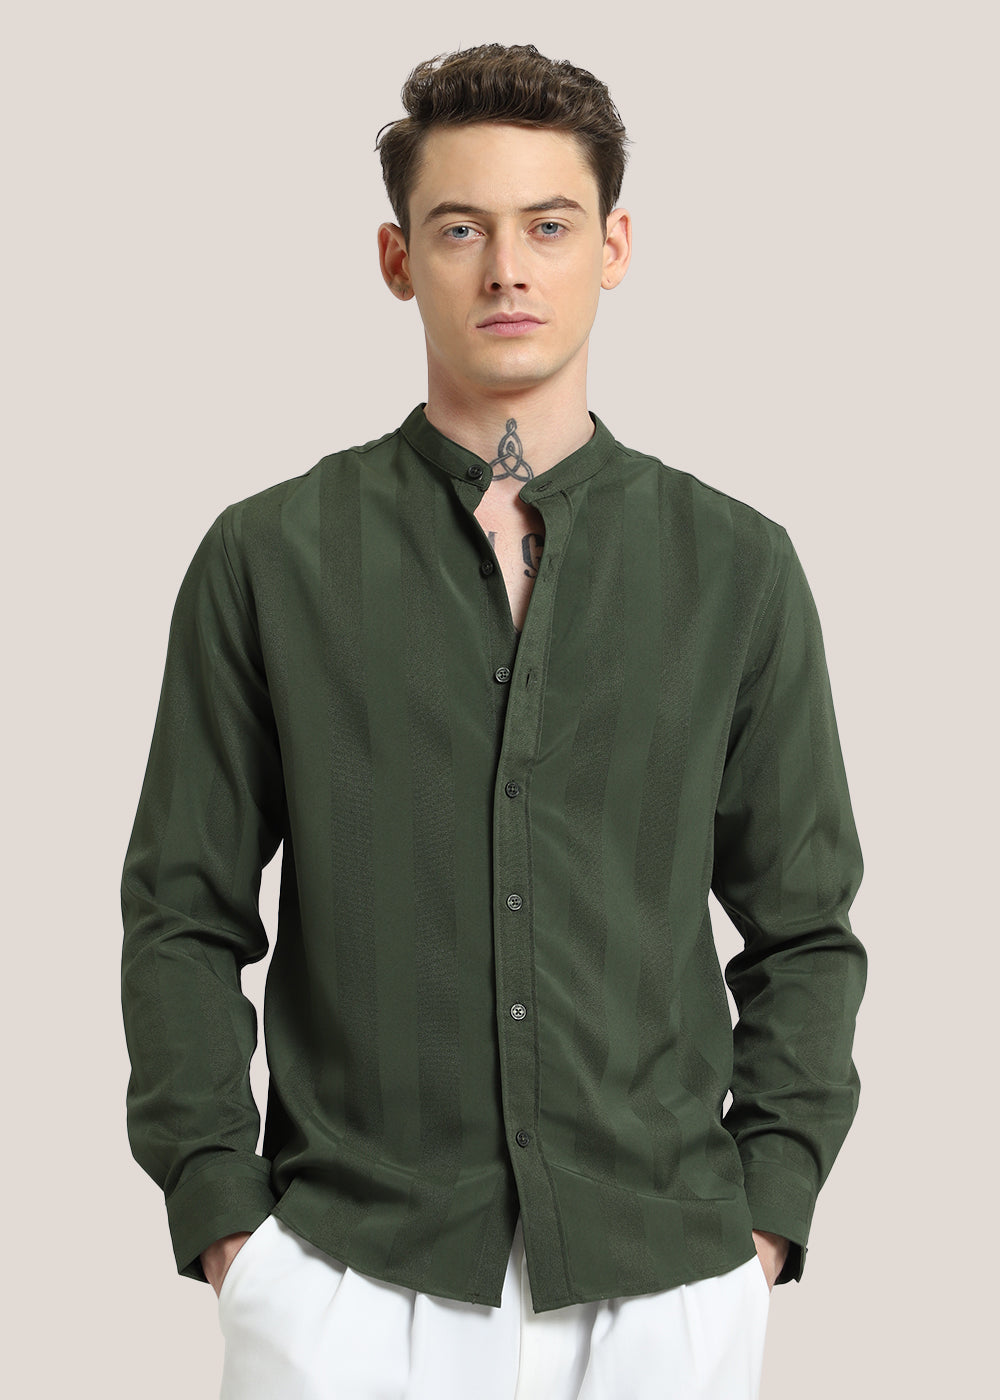 Sage Green Shein Patterned Shirt